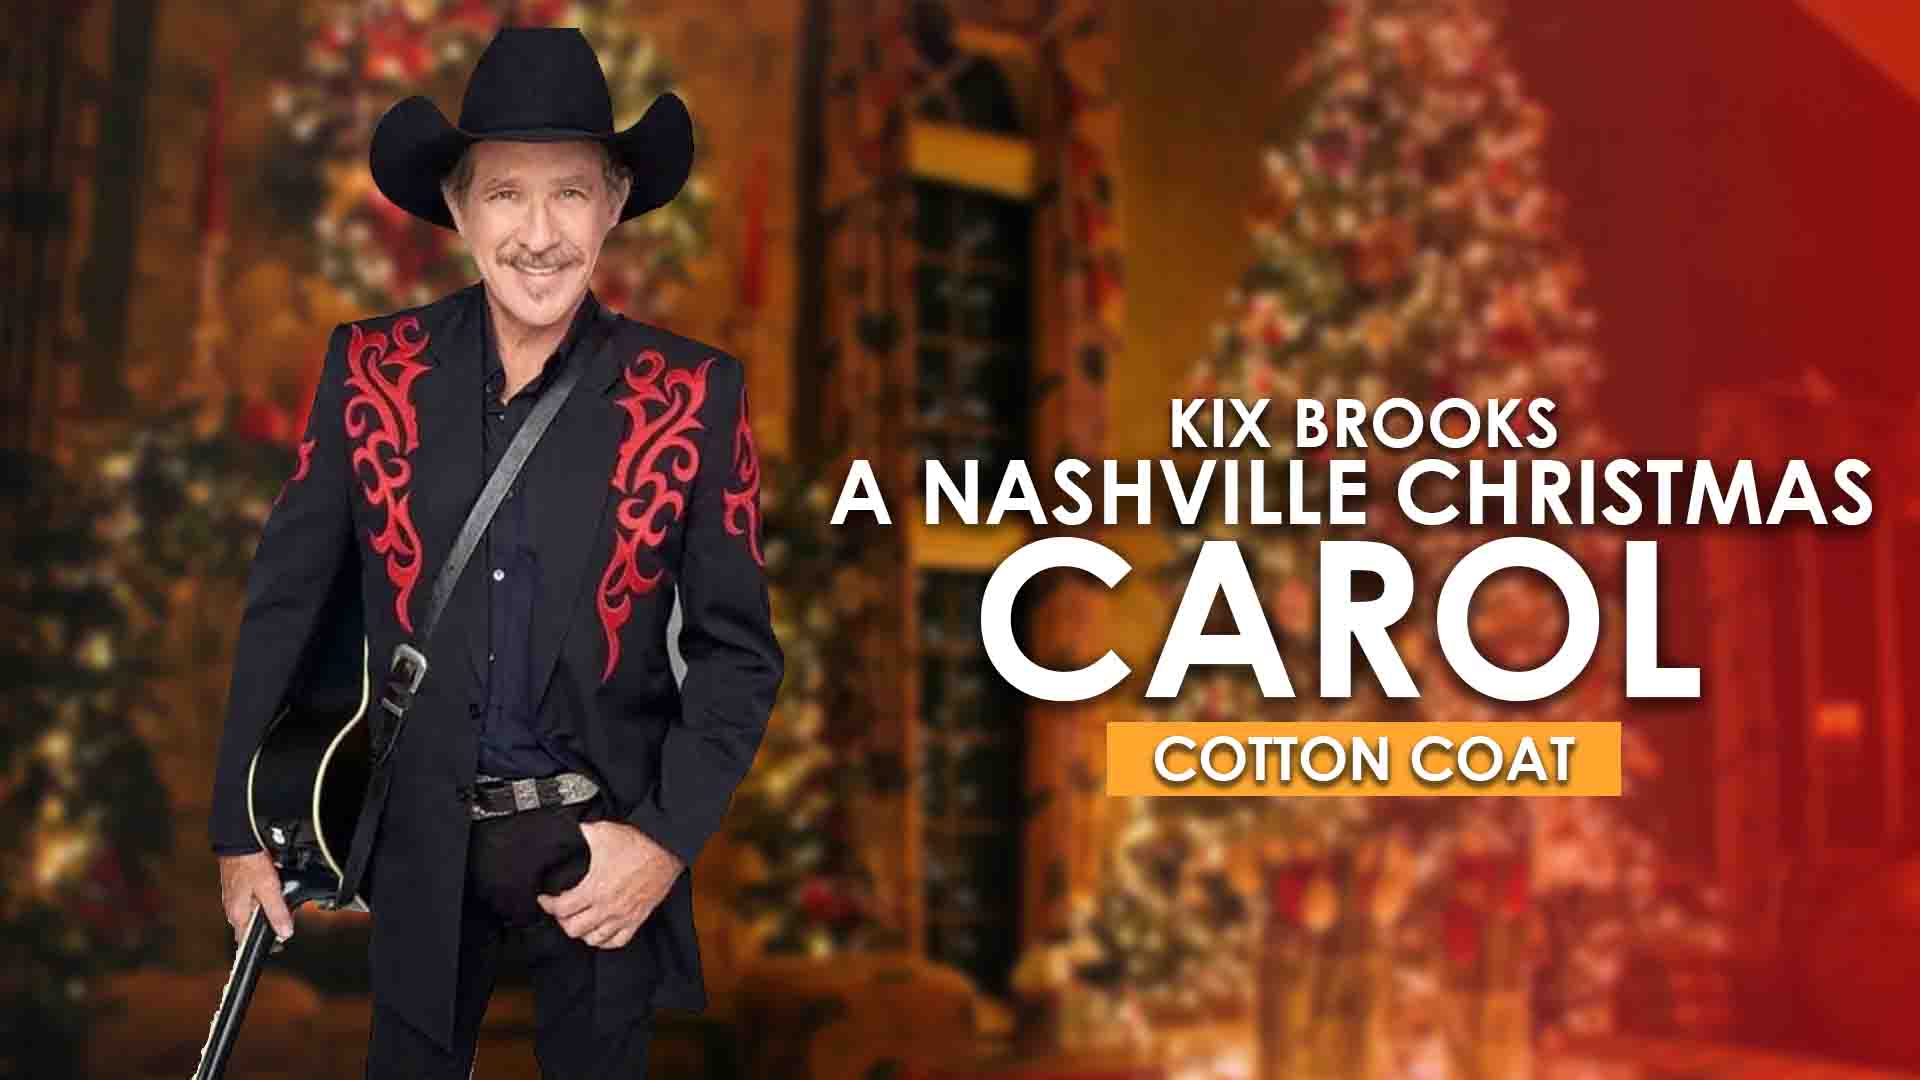 Kix Brooks A Nashville Christmas Carol Cotton Coat